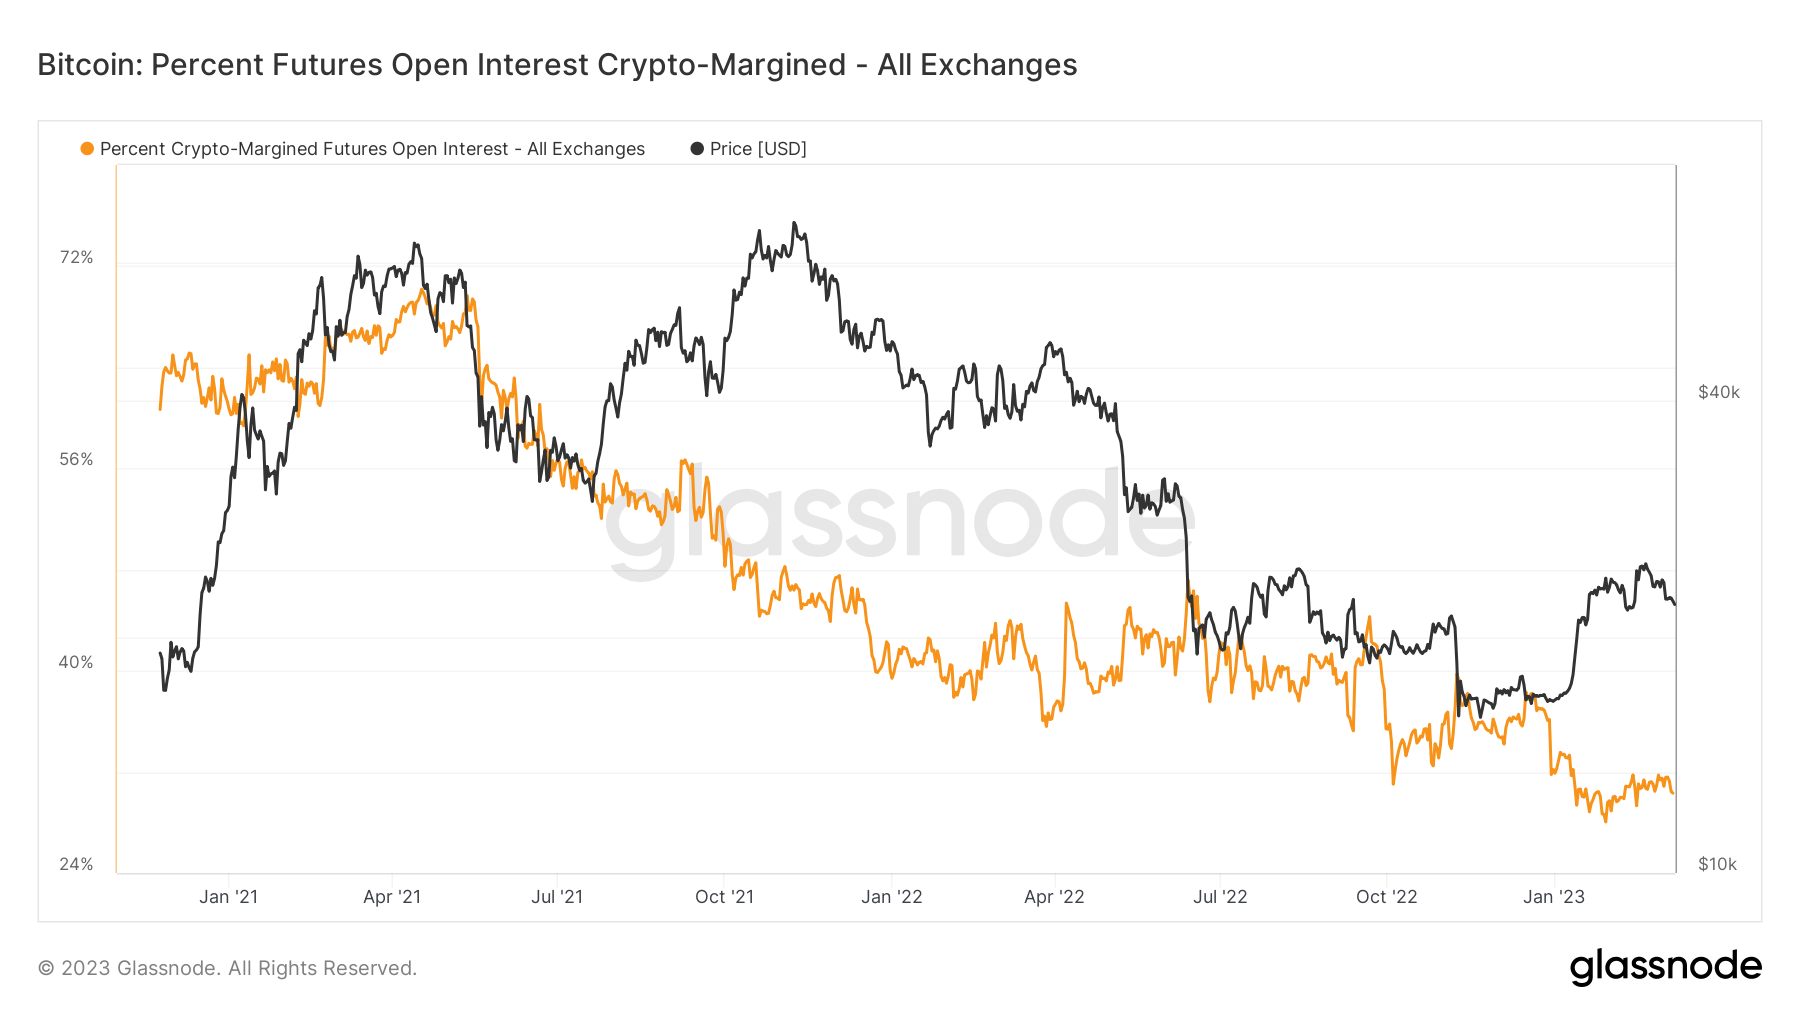 Futures Open Interest Crypto Margined: (Zdroj: Glassnode)